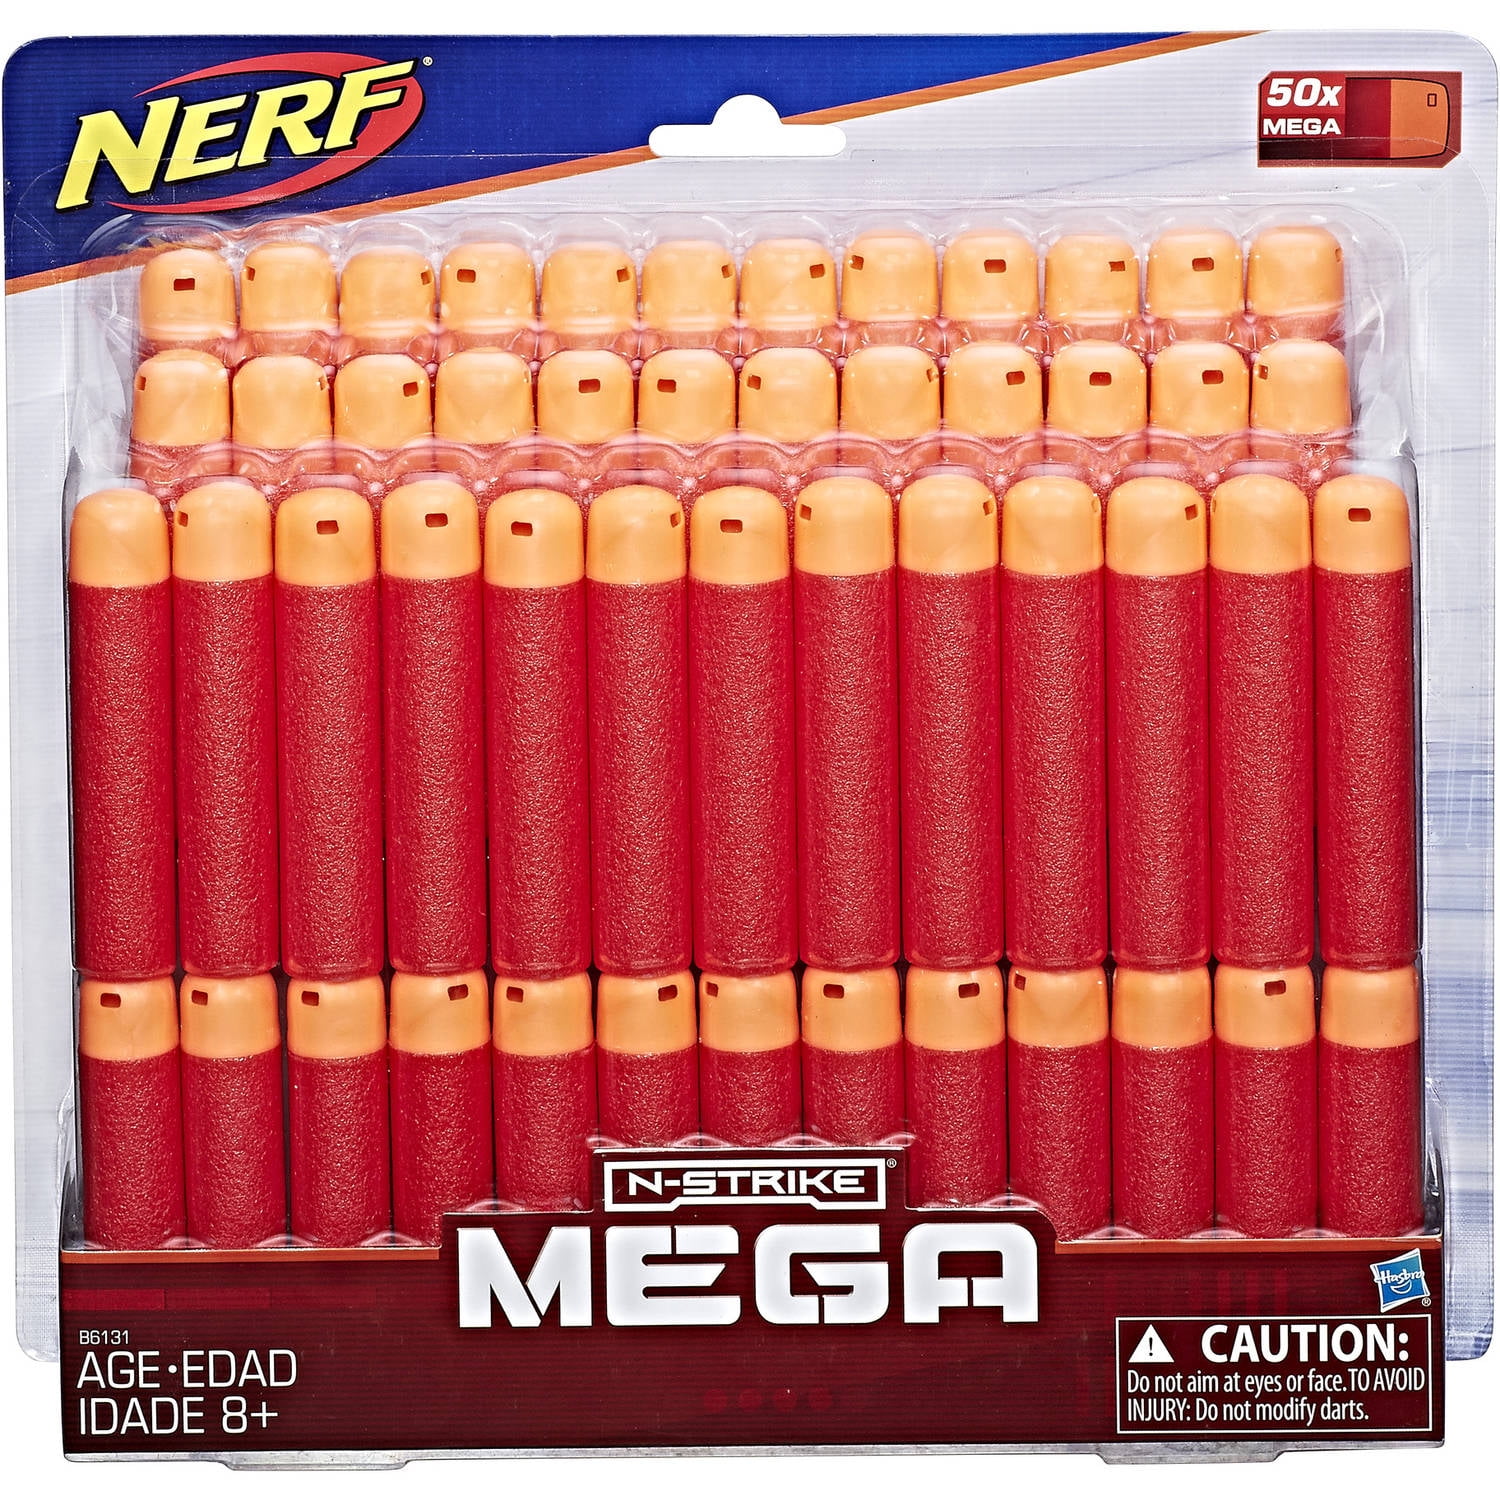 10x NERF Mega Darts N-strike Elite Series Magnus Large Foam Refill Replacement for sale online 